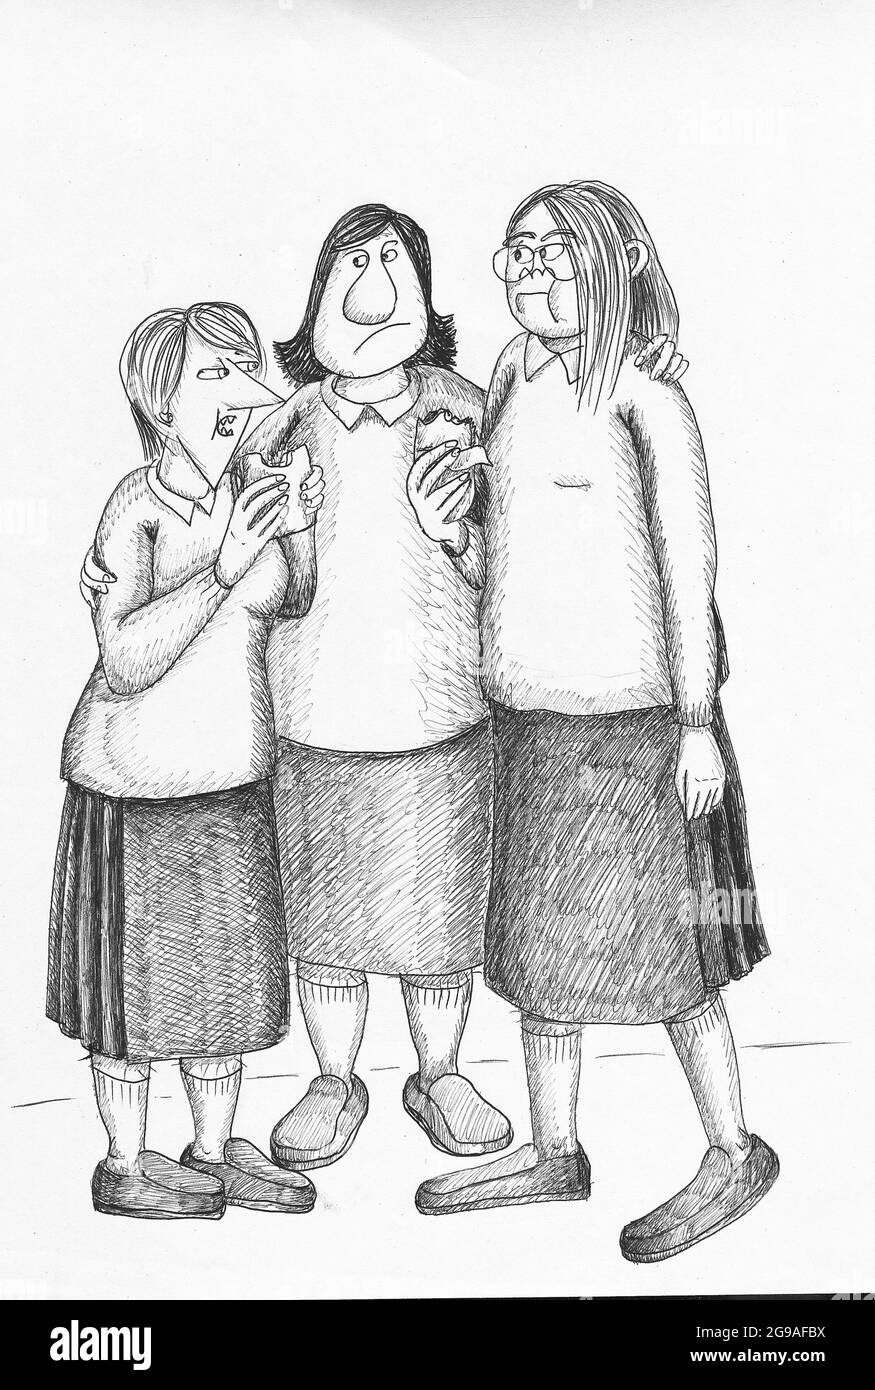 Three schoolgirls wearing uniform. Illustration. Stock Photo